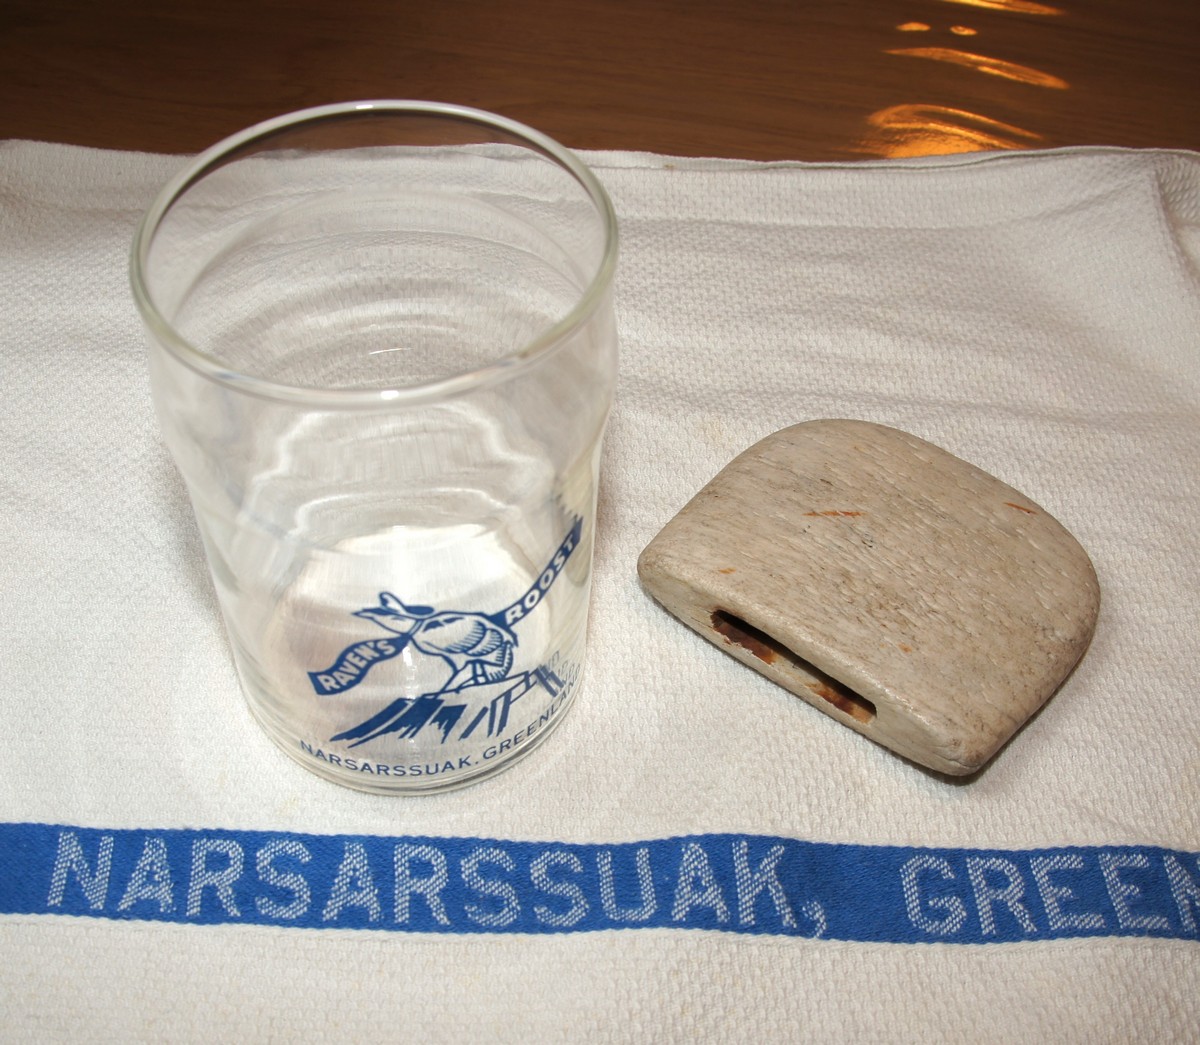 Narsarsuaq-billeder/Narsarsuaq%20souveniers%20korr%20DSC03592.jpg